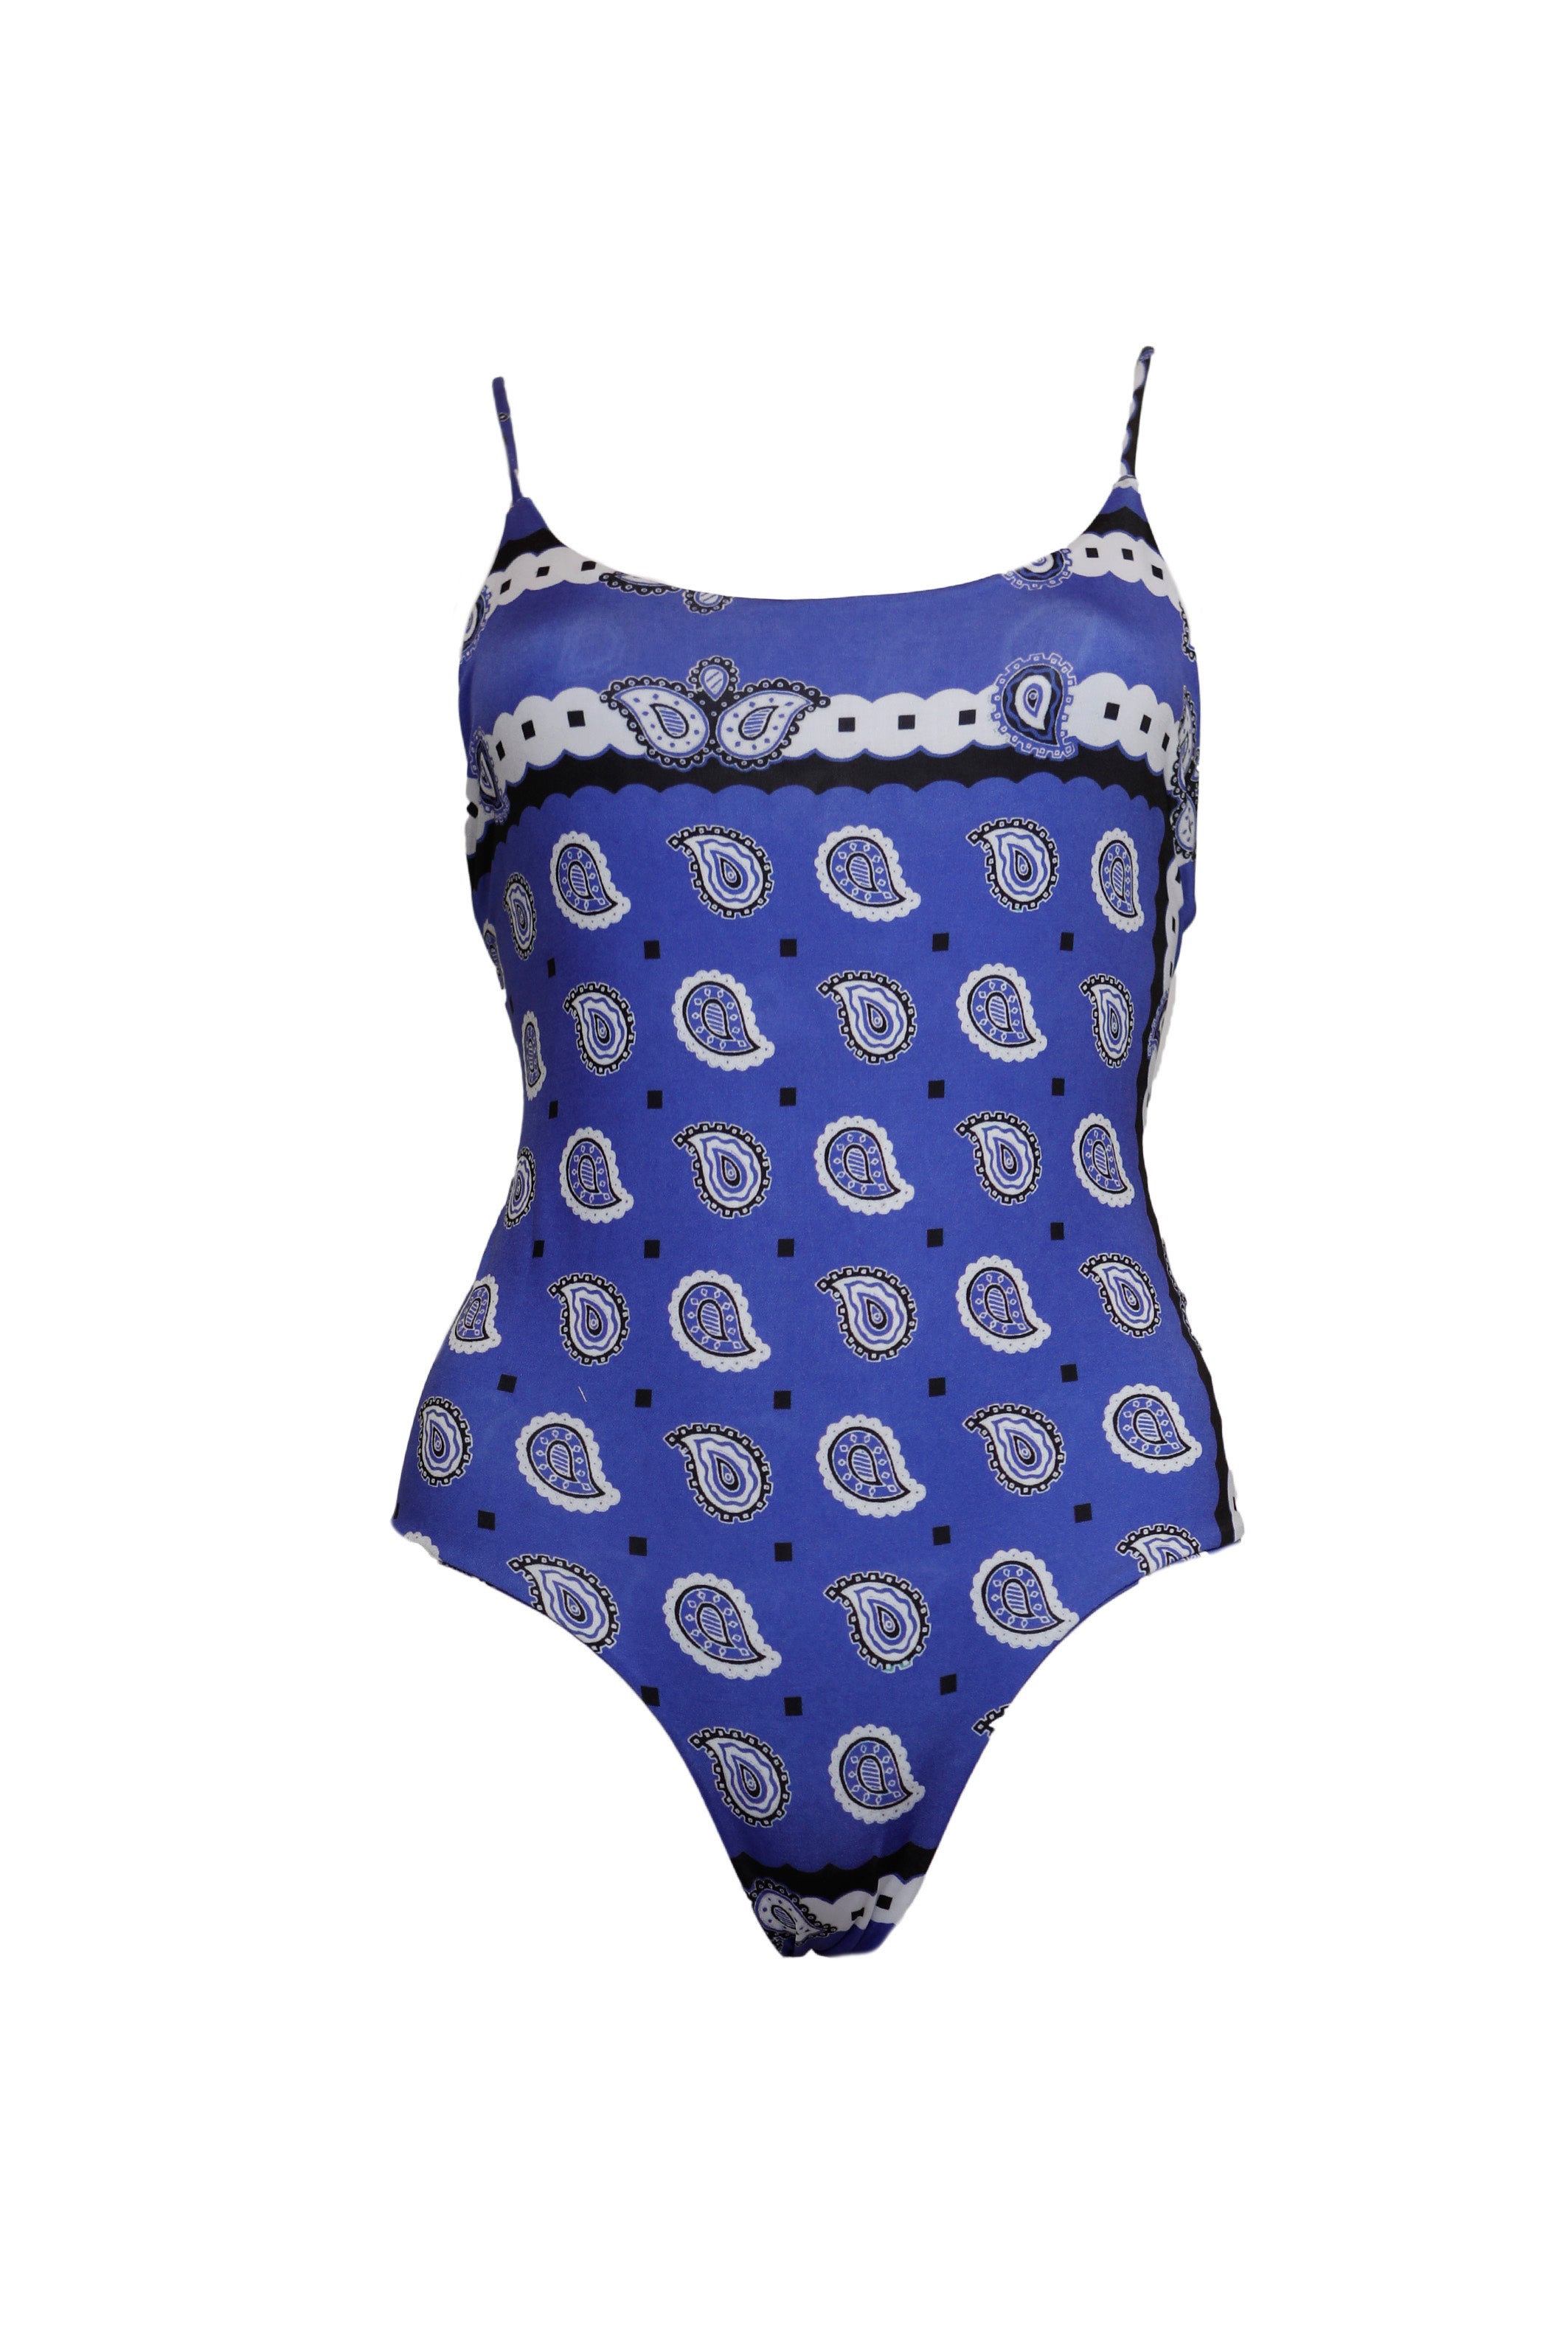 FEDERICA - one-piece swimsuit in blue Ibiza bandana print lycra